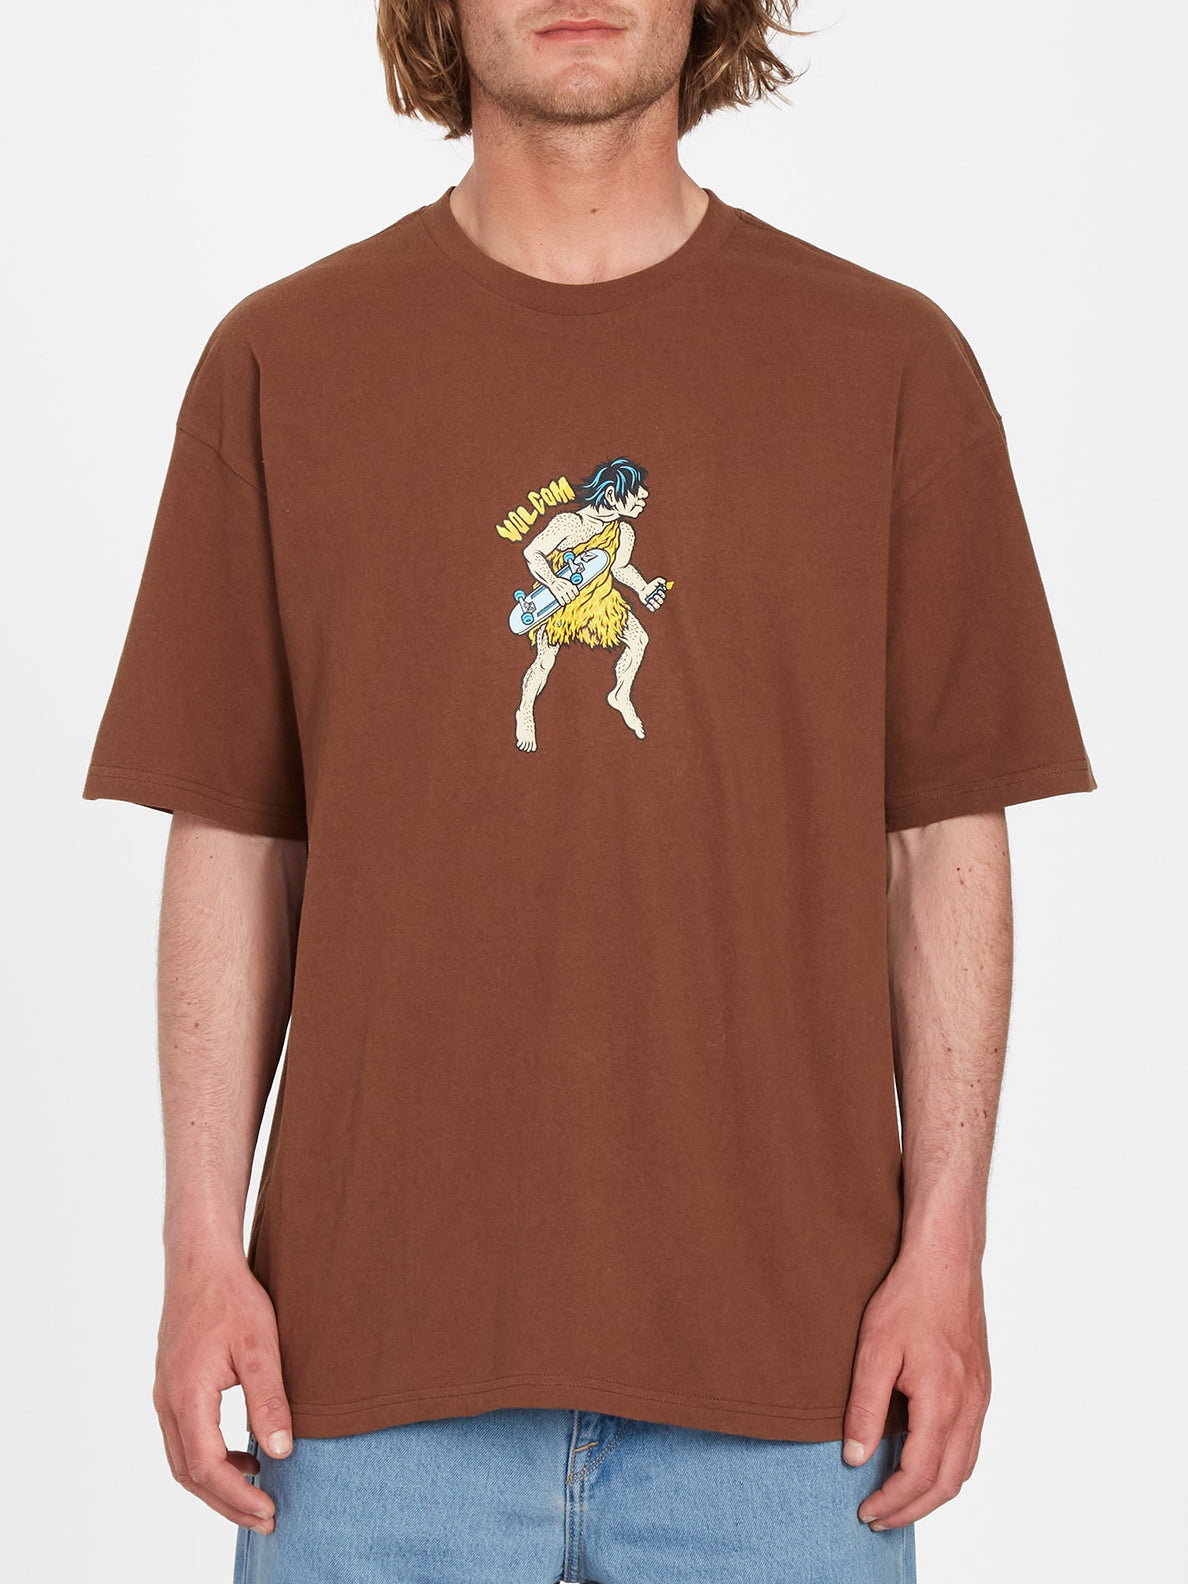 Todd Bratrud 2 T-shirt - BURRO BROWN (A5212307_BRR) [9]